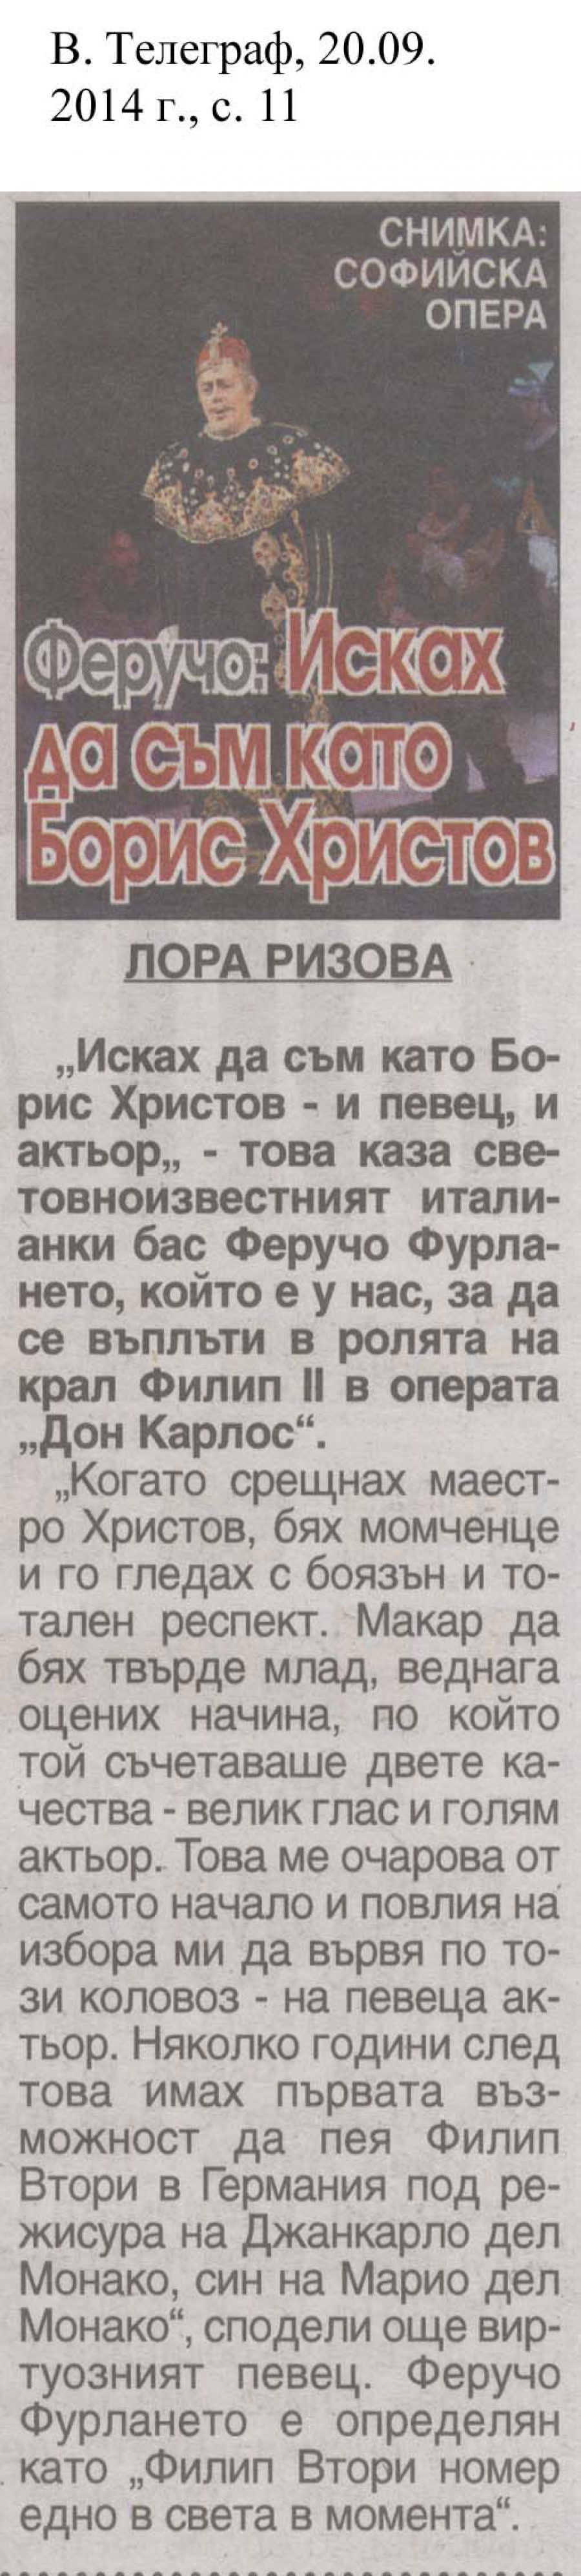 Исках да съм като "Борис Христов" - в-к Телеграф - 20.09.2014